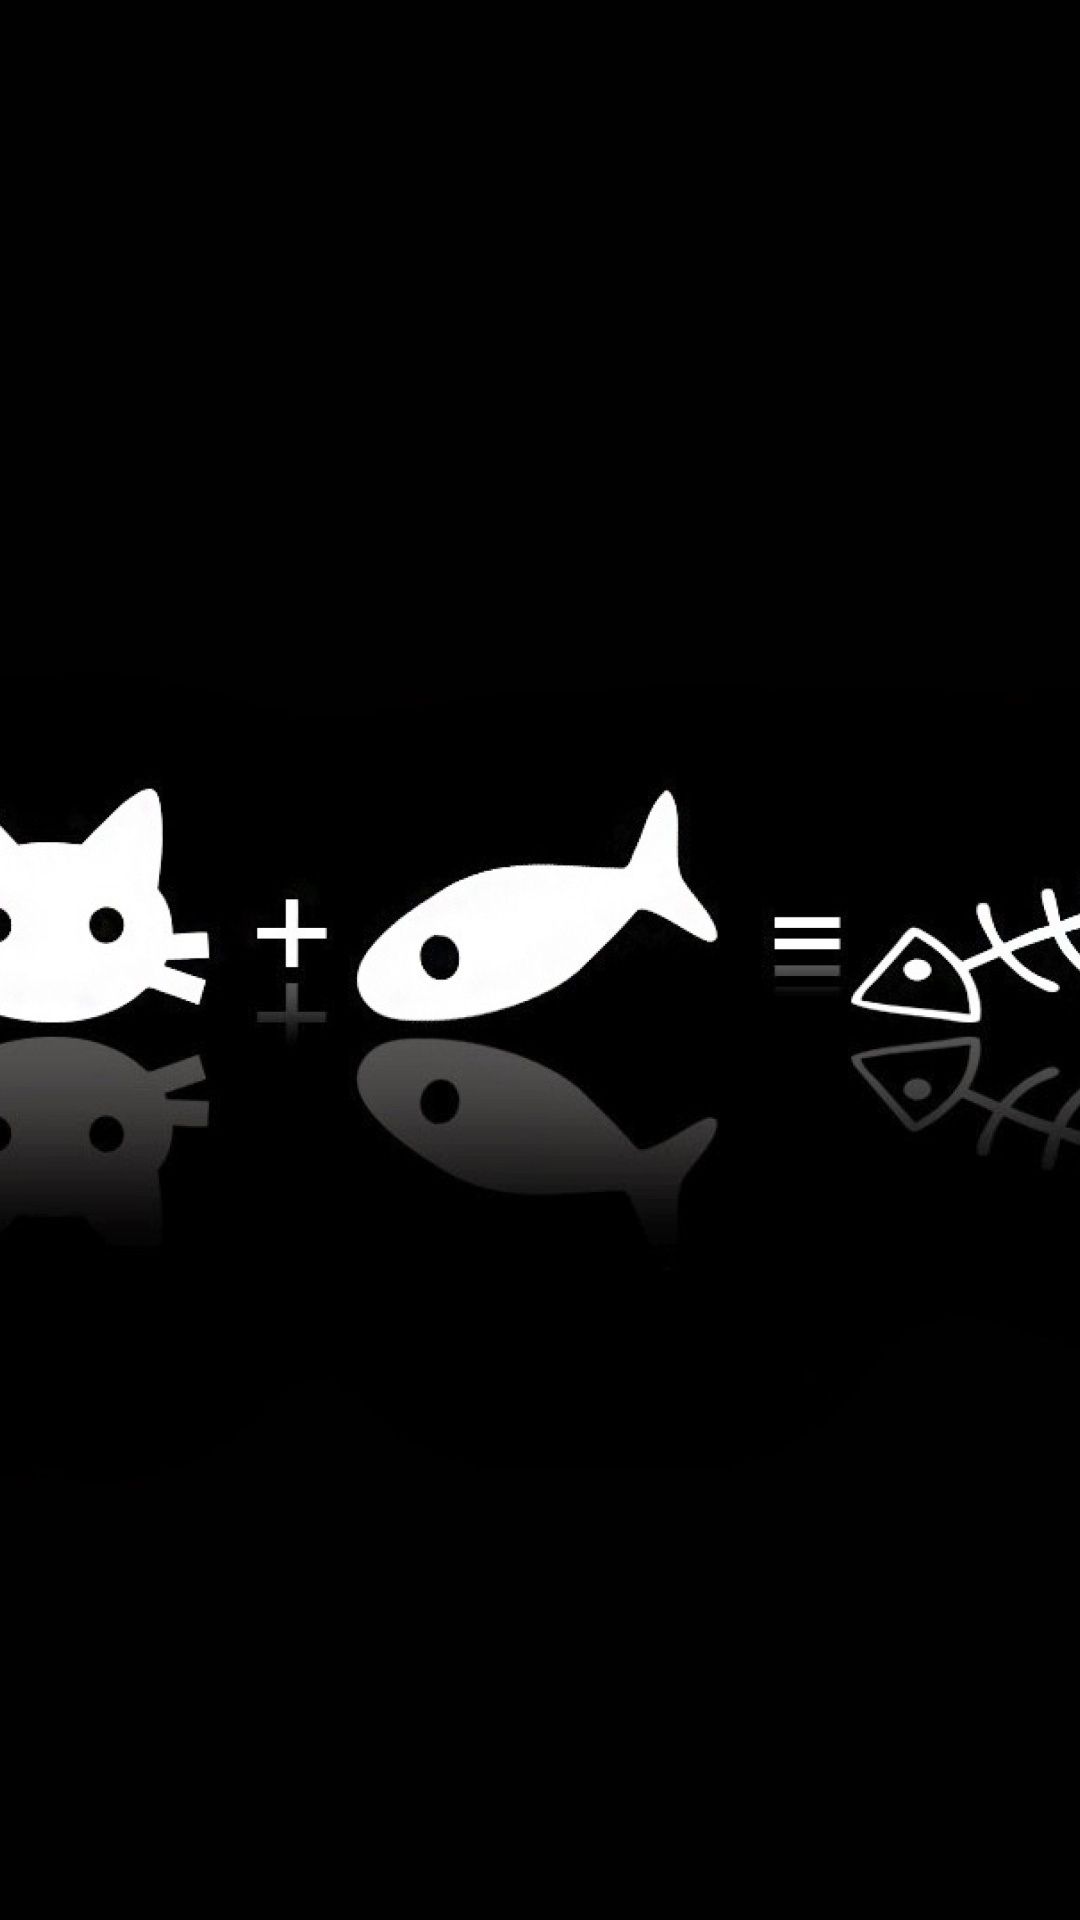 Обои Cat ate fish funny cover 1080x1920